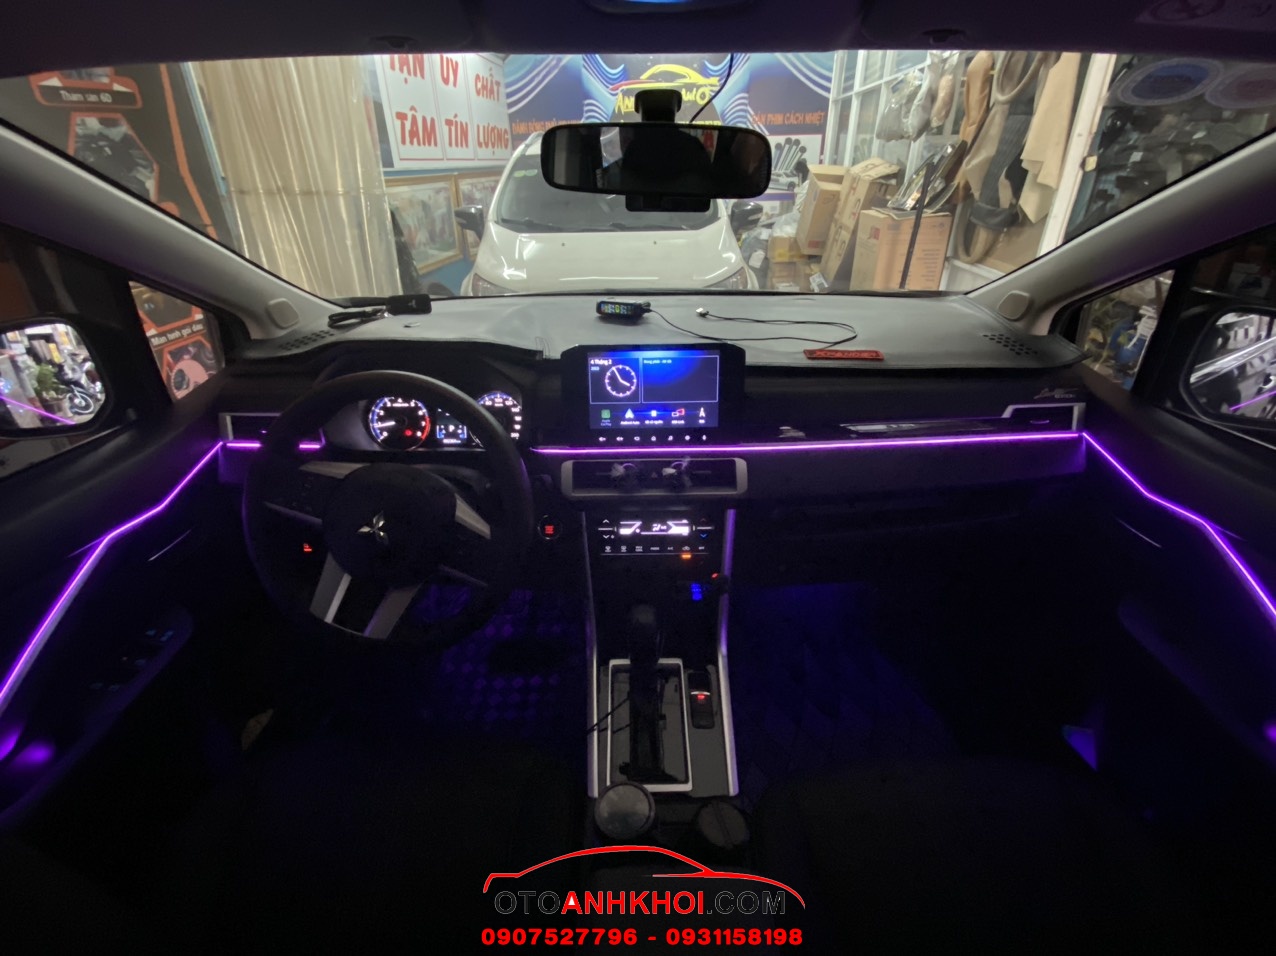 Đèn Led nội thất xe Mitsubishi Xpander